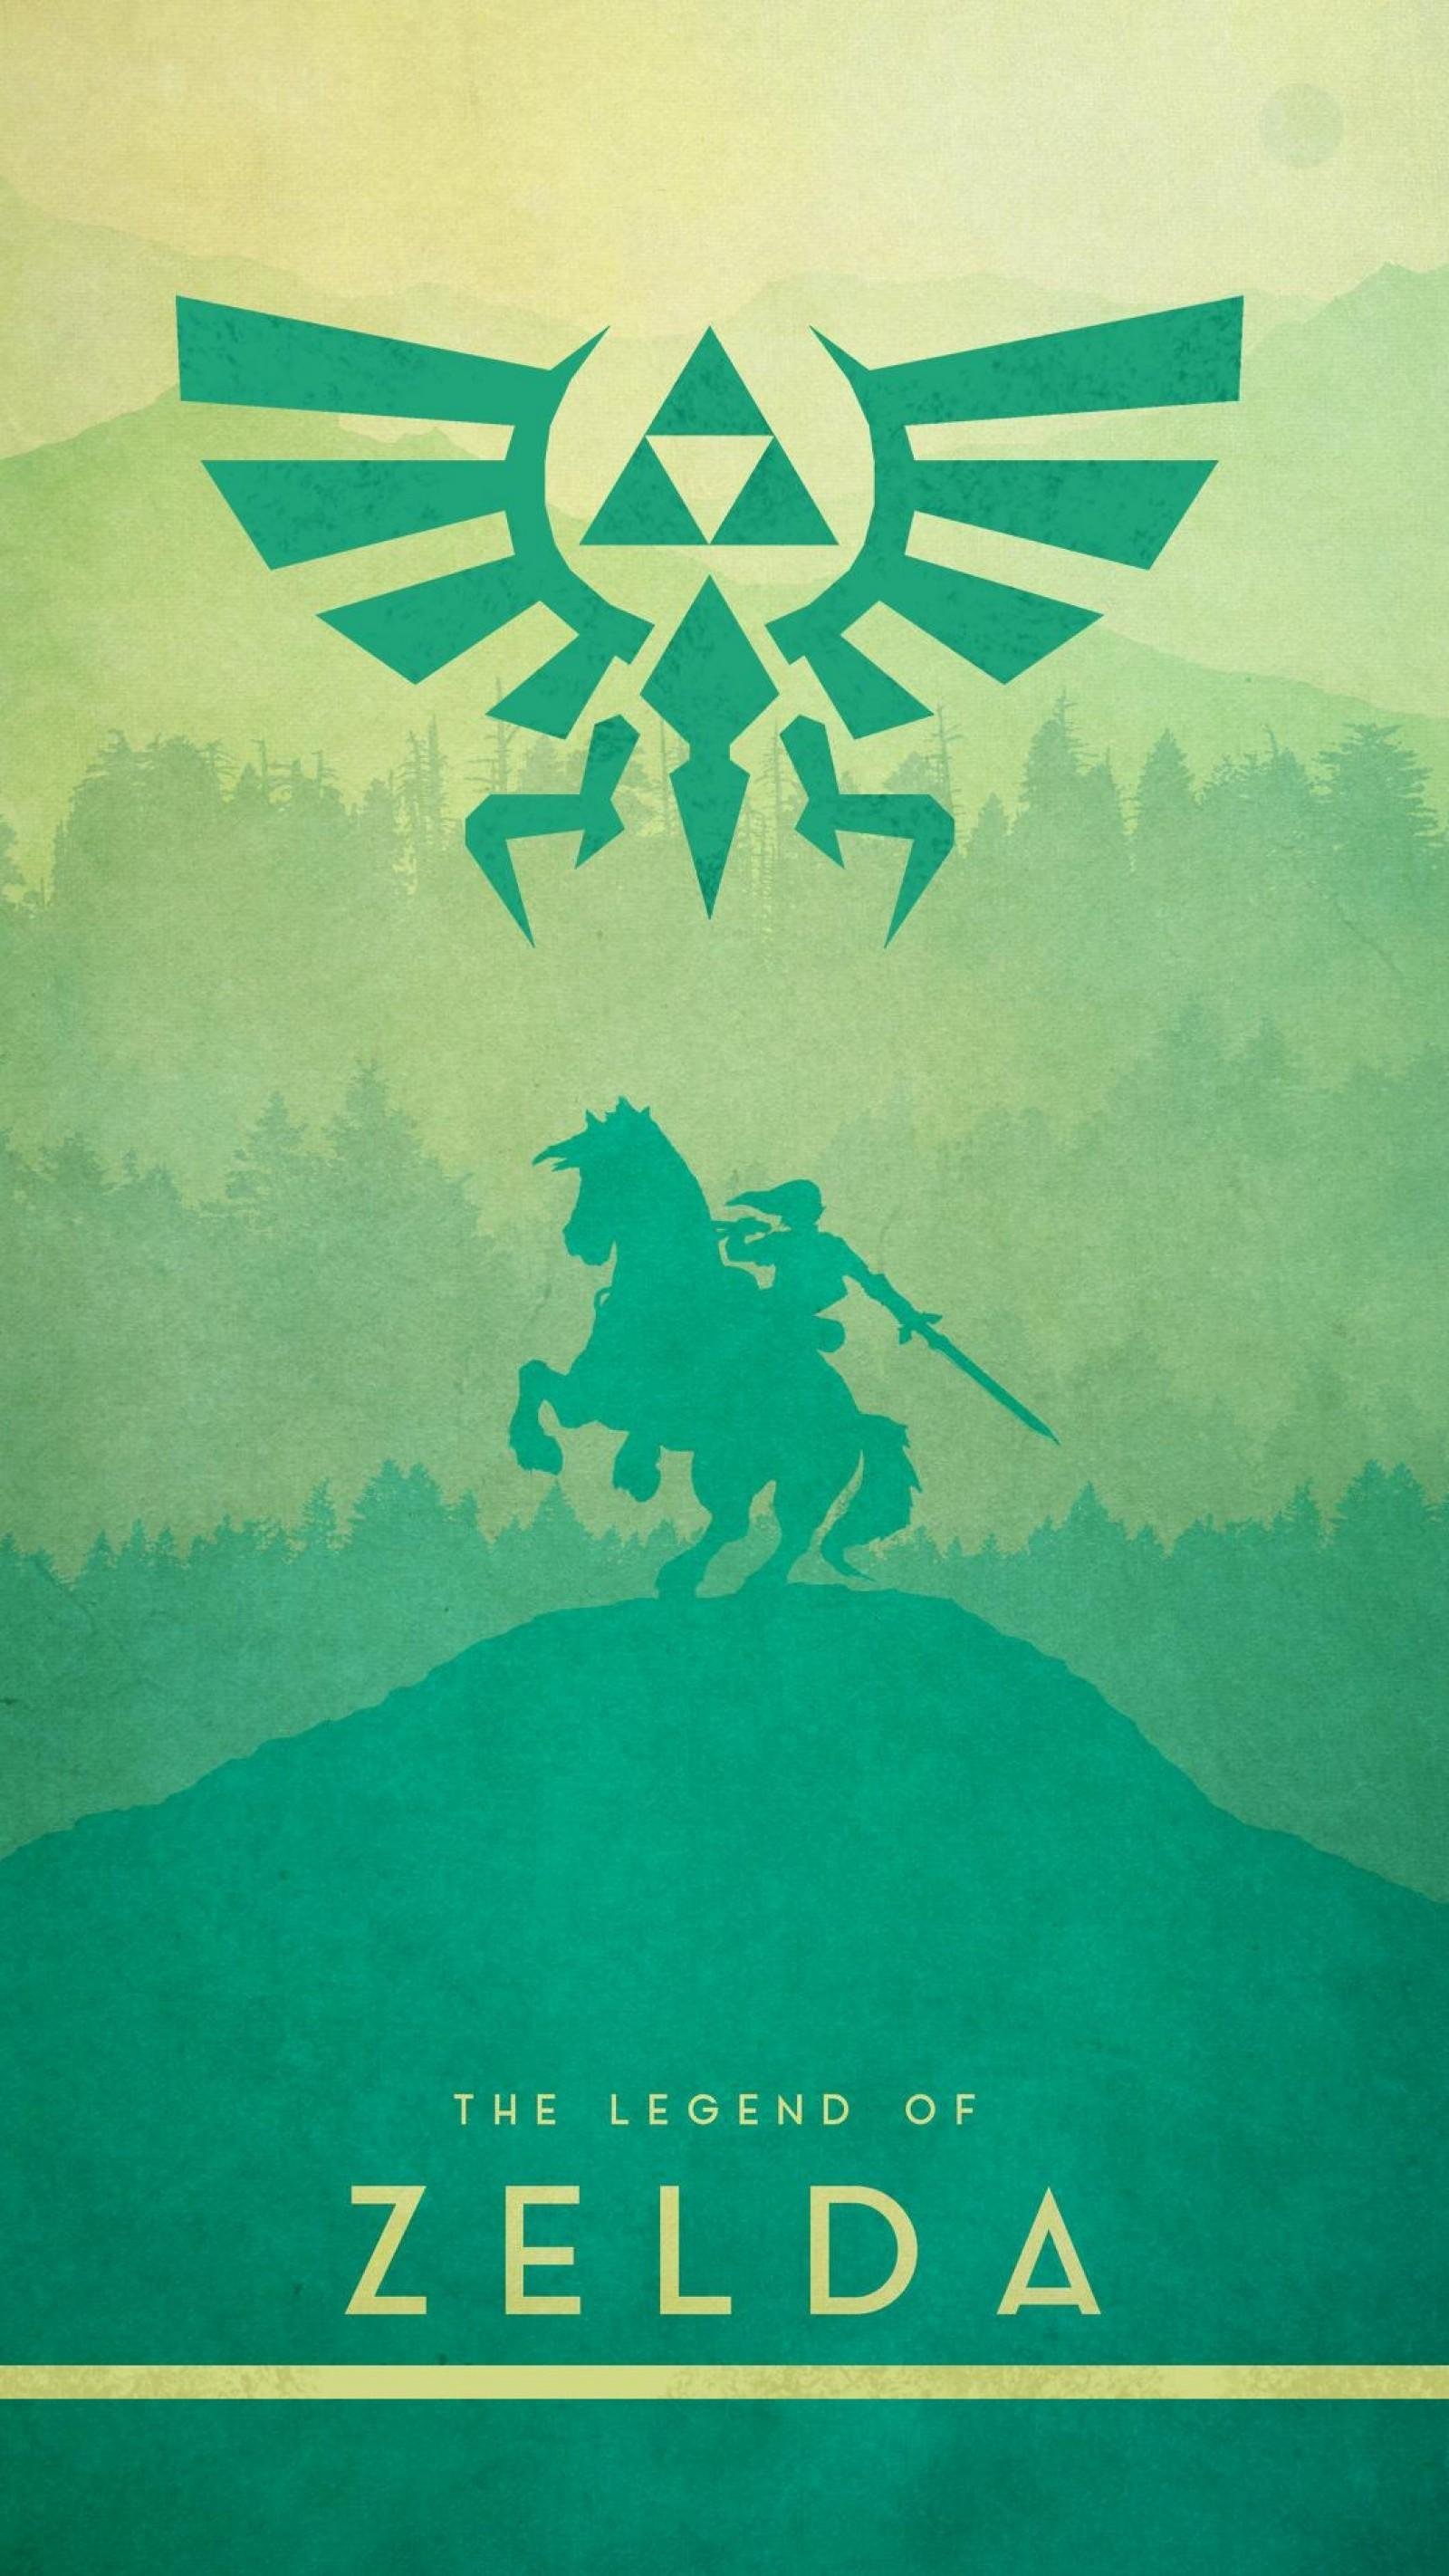 The Legend Of Zelda Wallpaper Background, Link, Pictures Of Link From Zelda  Background Image And Wallpaper for Free Download